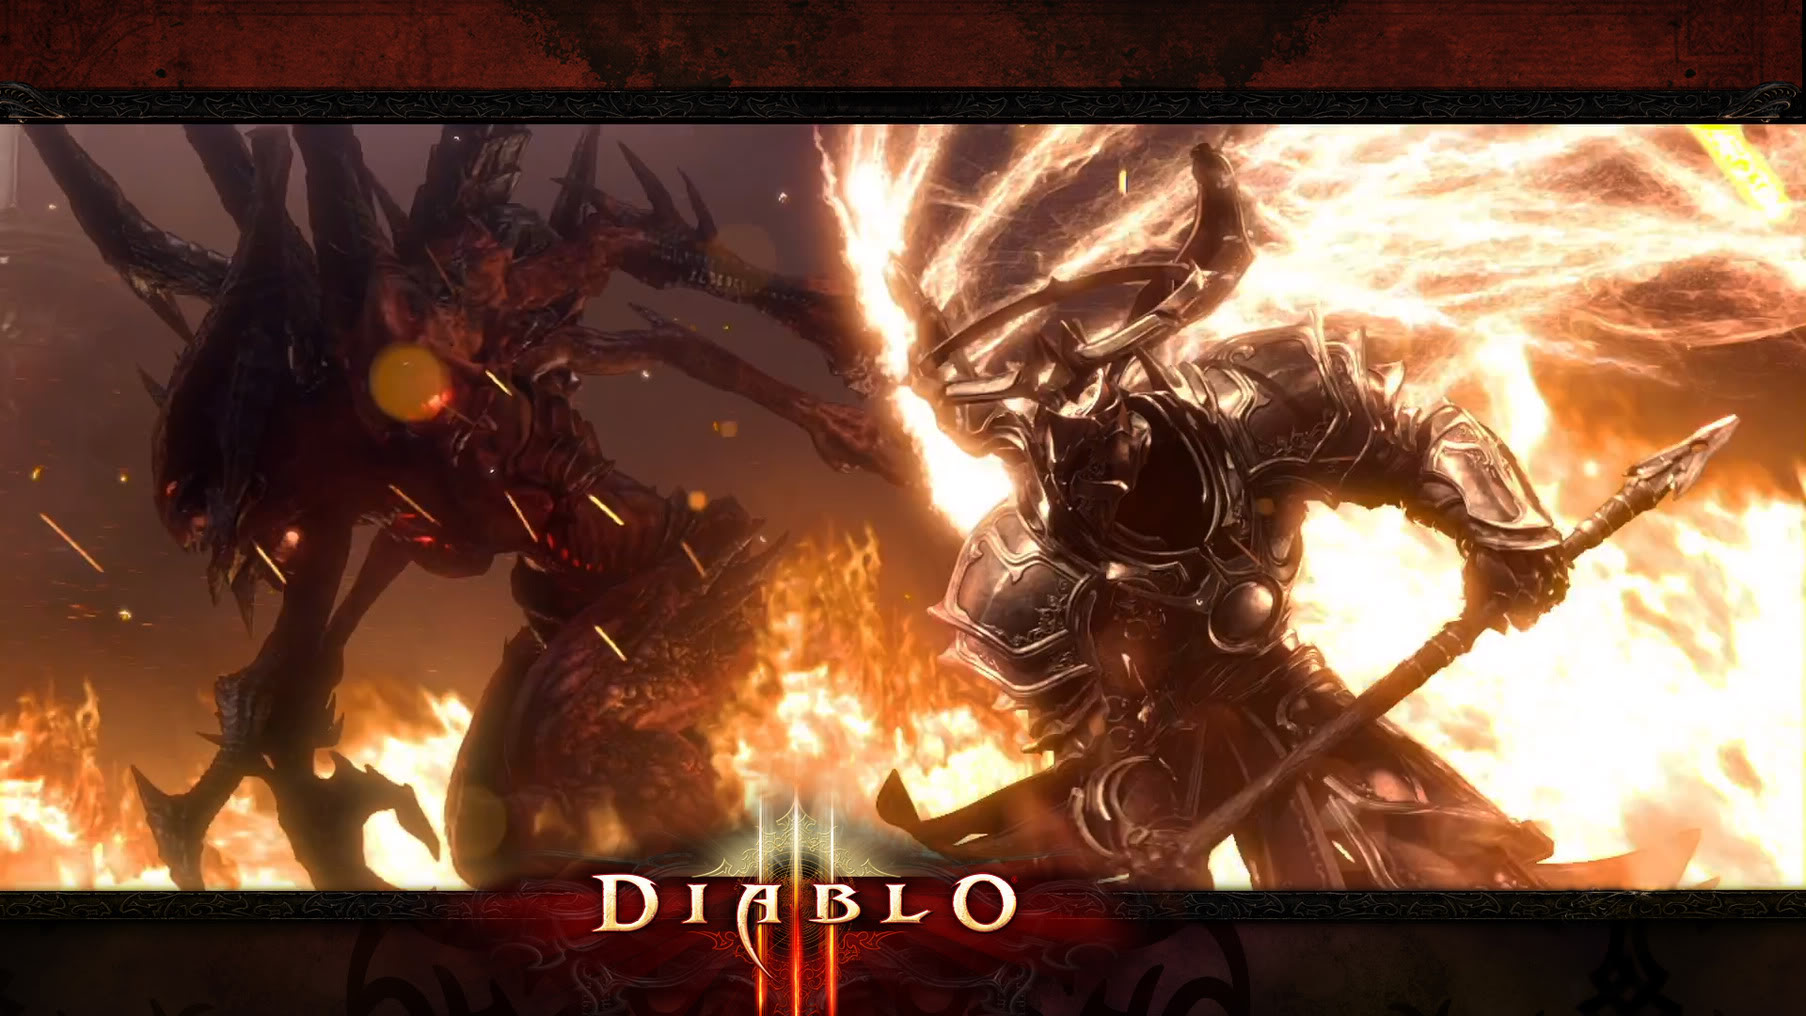 D3 TV Spot Wallpaper: Diablo Burning | Diablo 3 and Diablo Forums ...